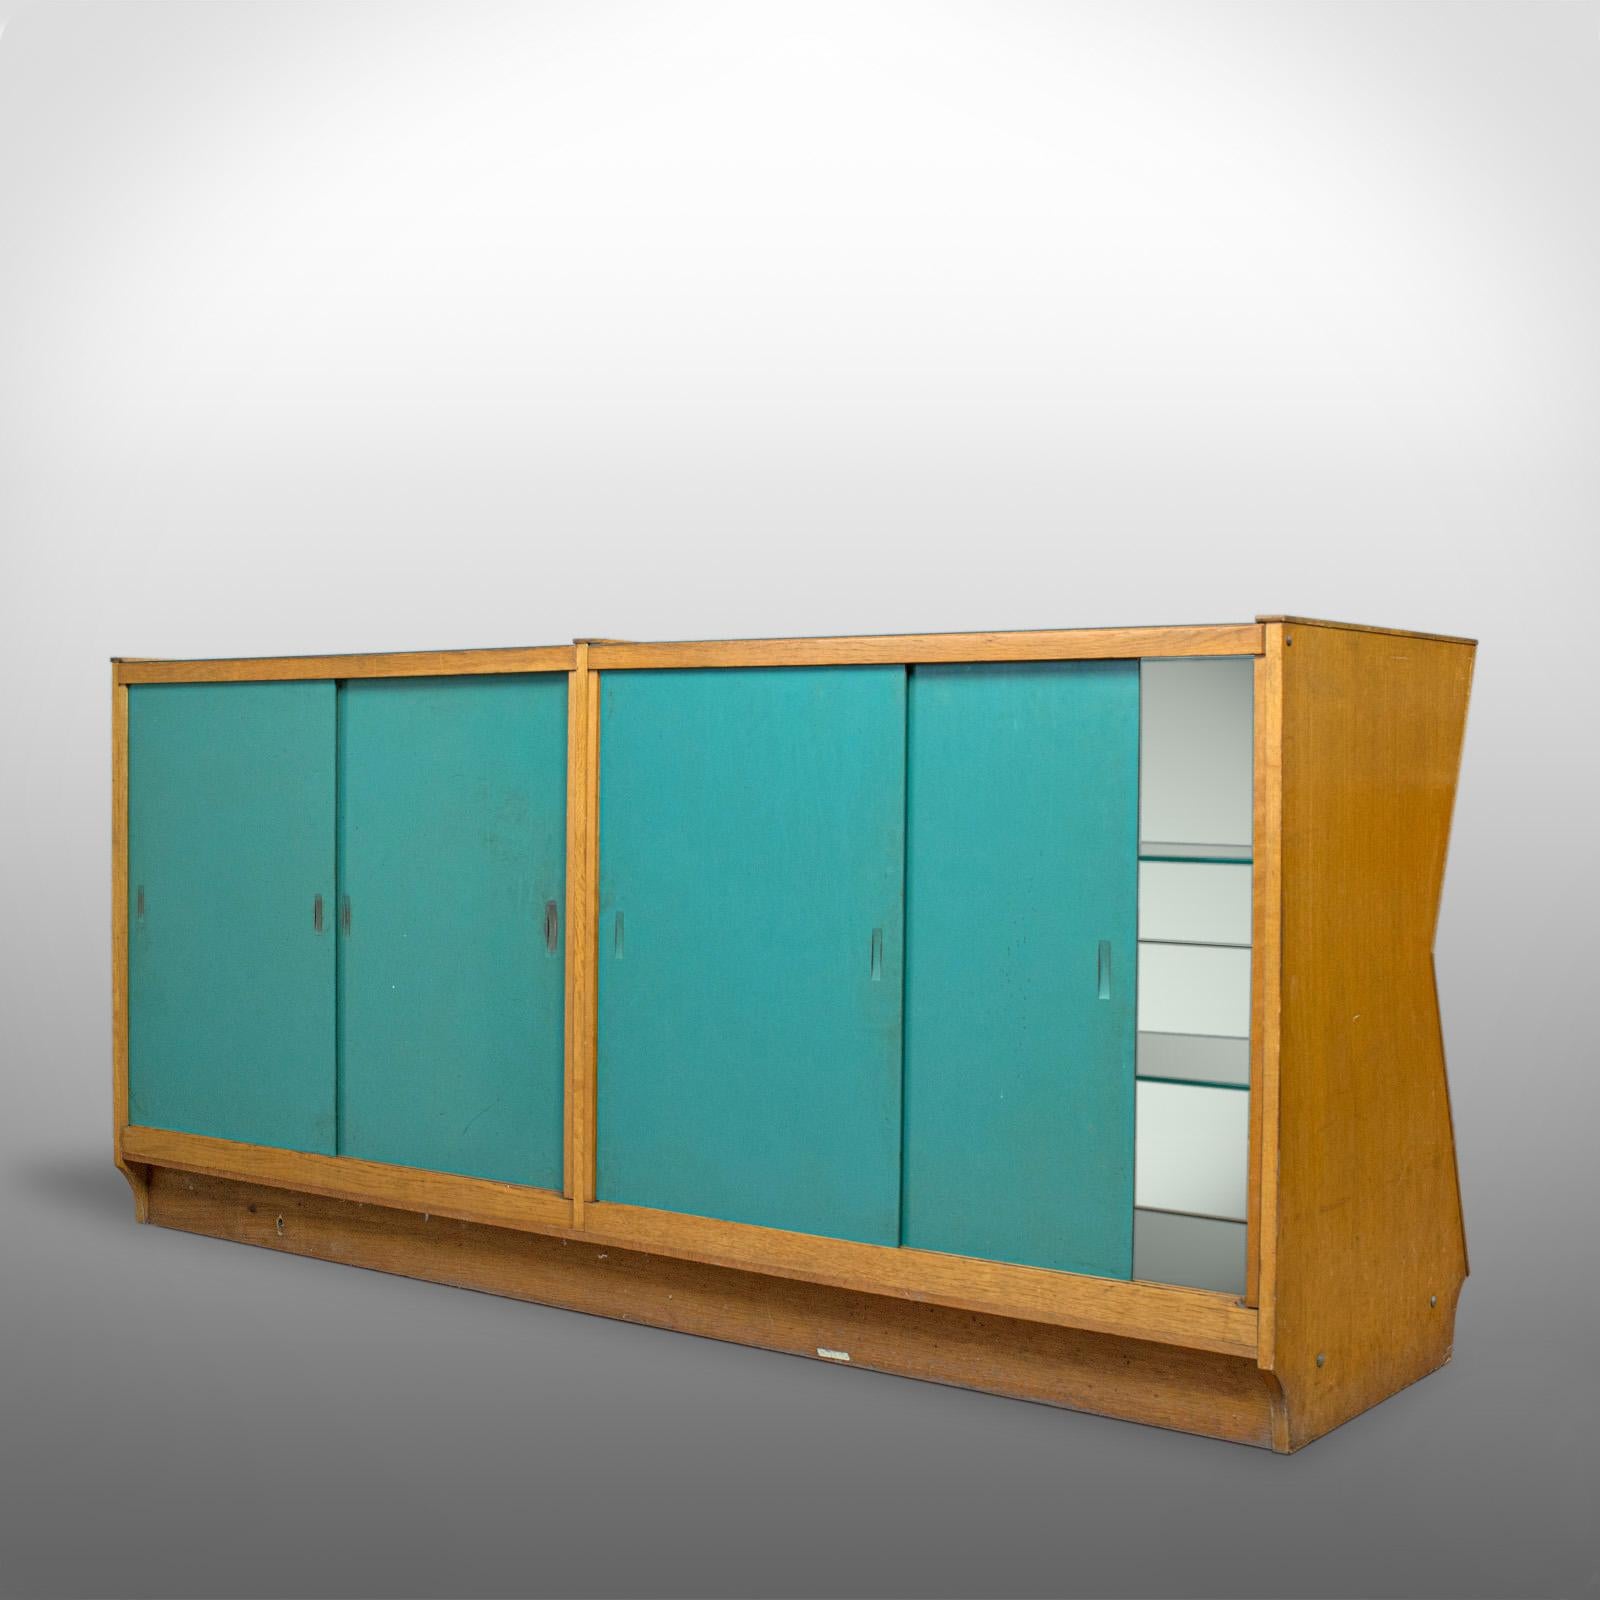 English Large Vintage Display Cabinet, Glass, Oak, Retail, Shop-Fitting, Art Deco c.1930